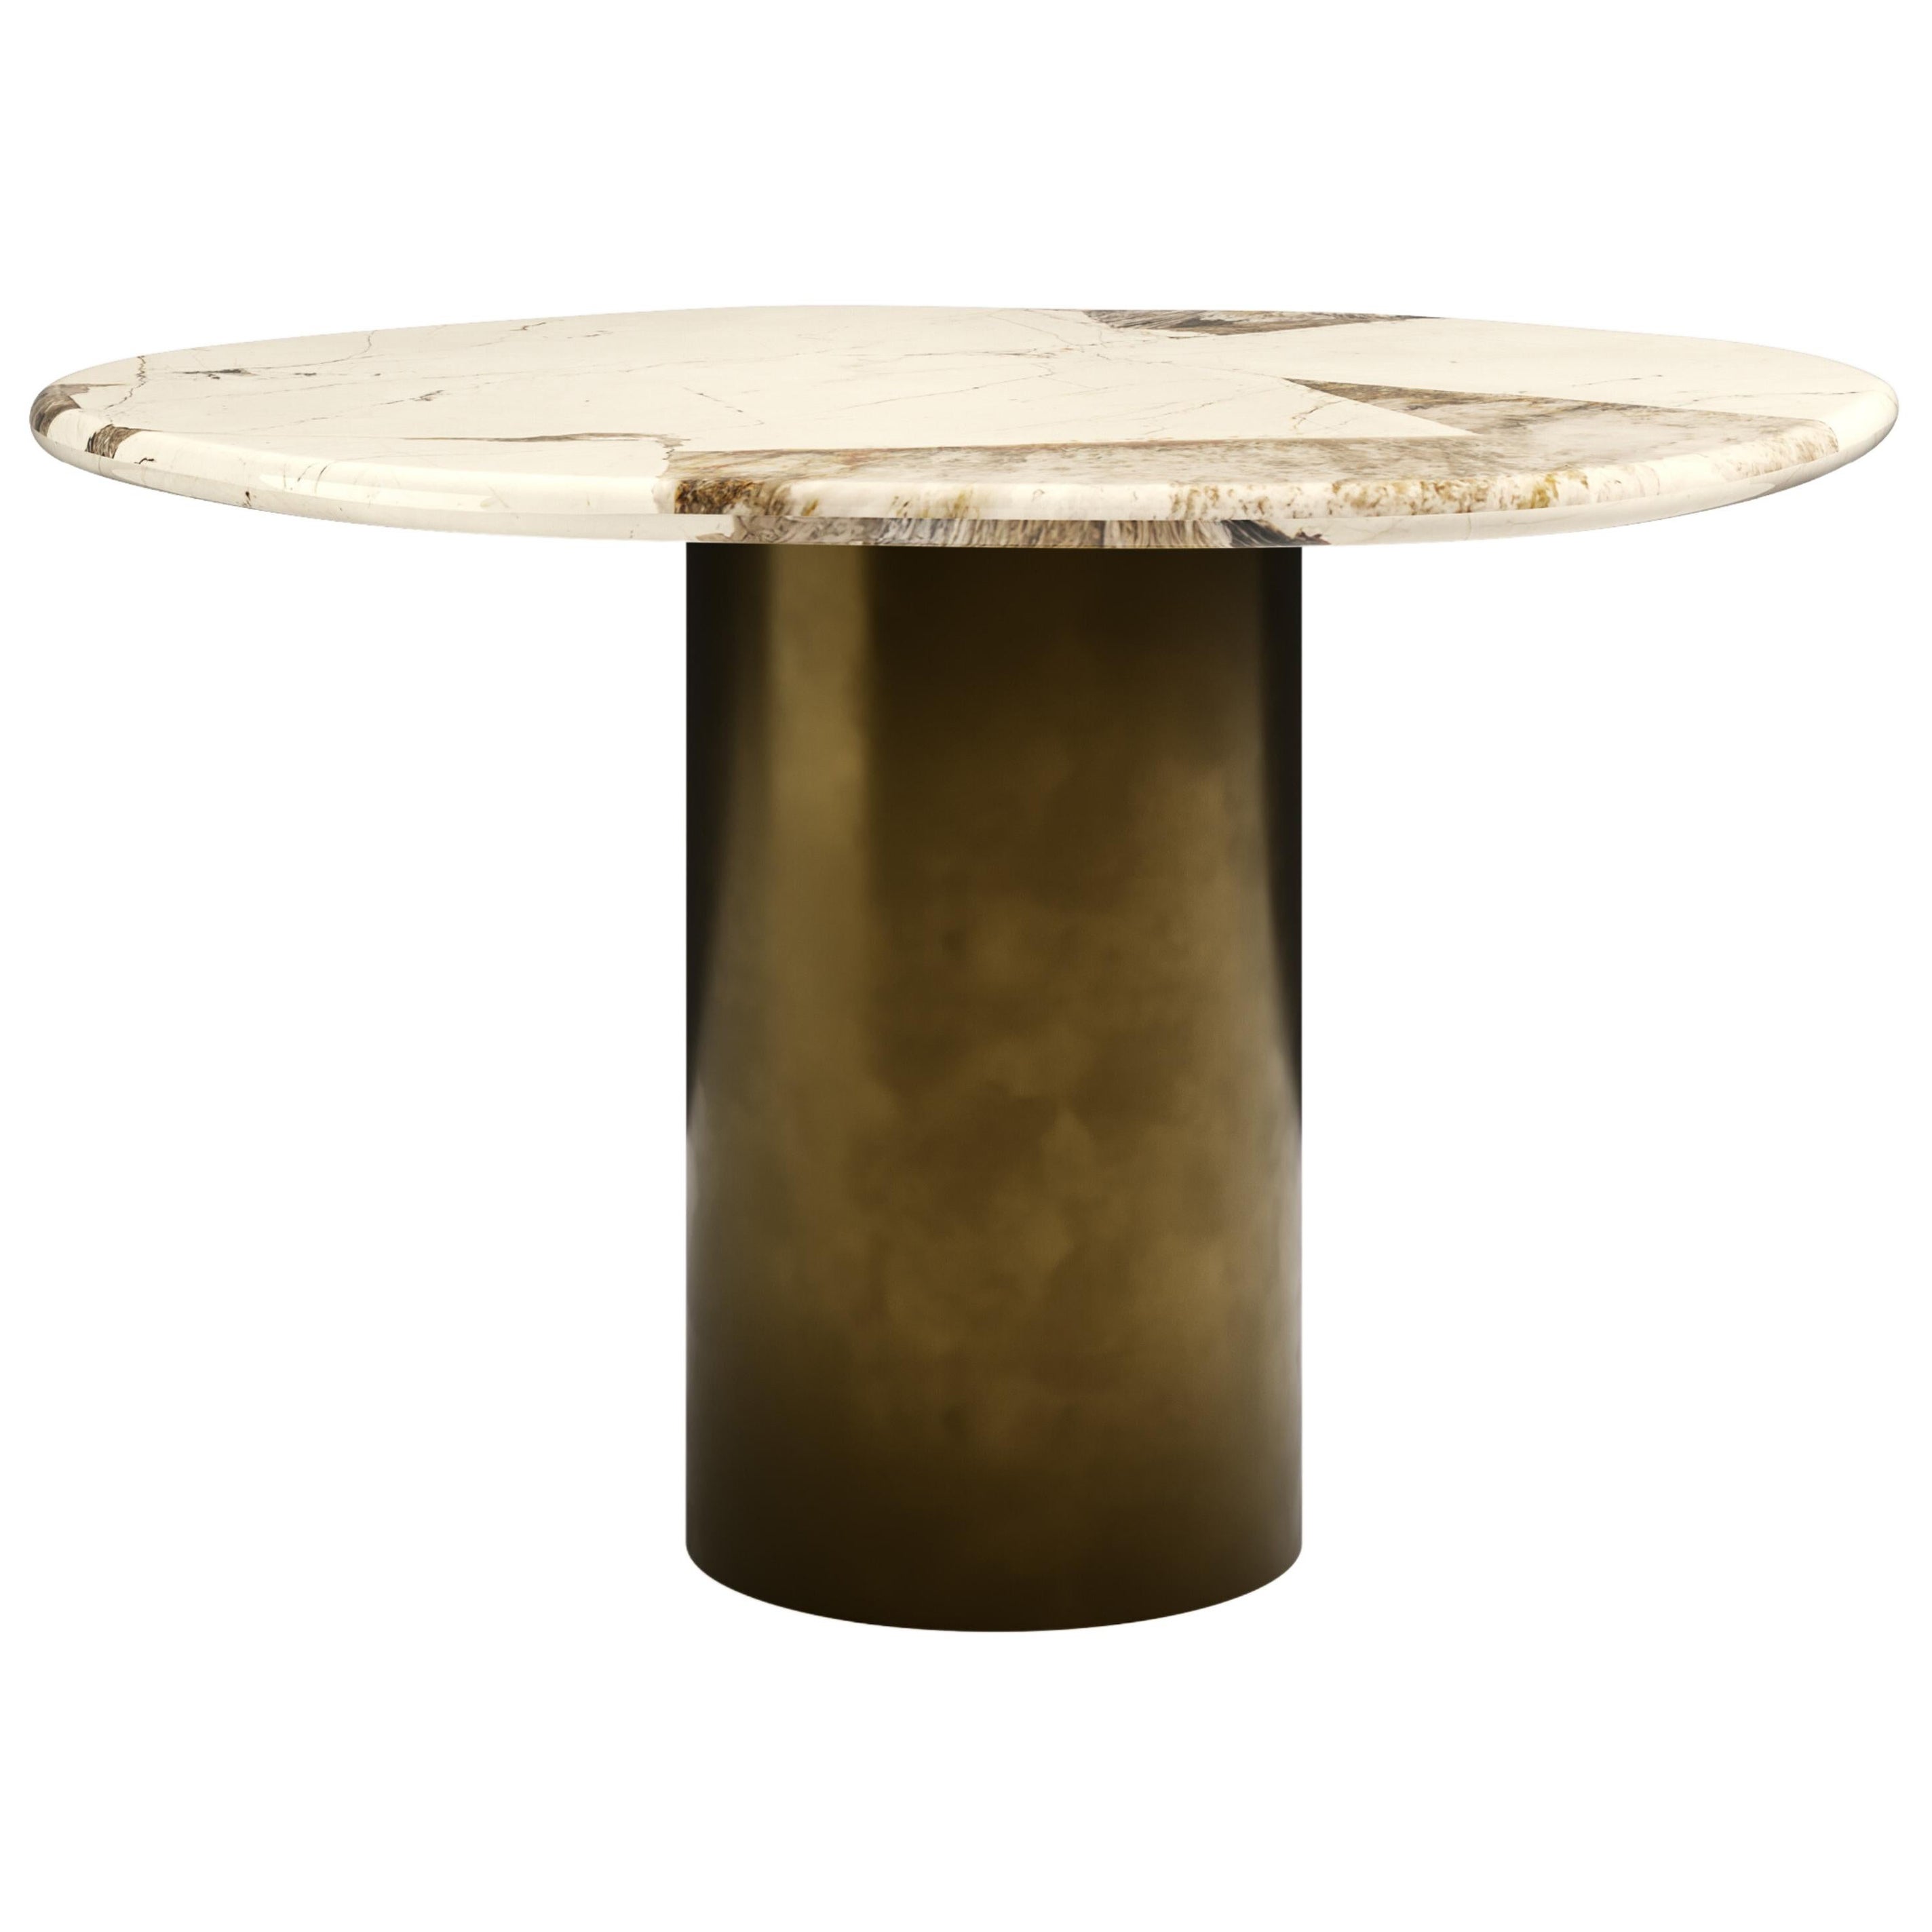 FORM(LA) Lago Round Dining Table 60”L x 60”W x 30”H Quartzite & Antique Bronze For Sale